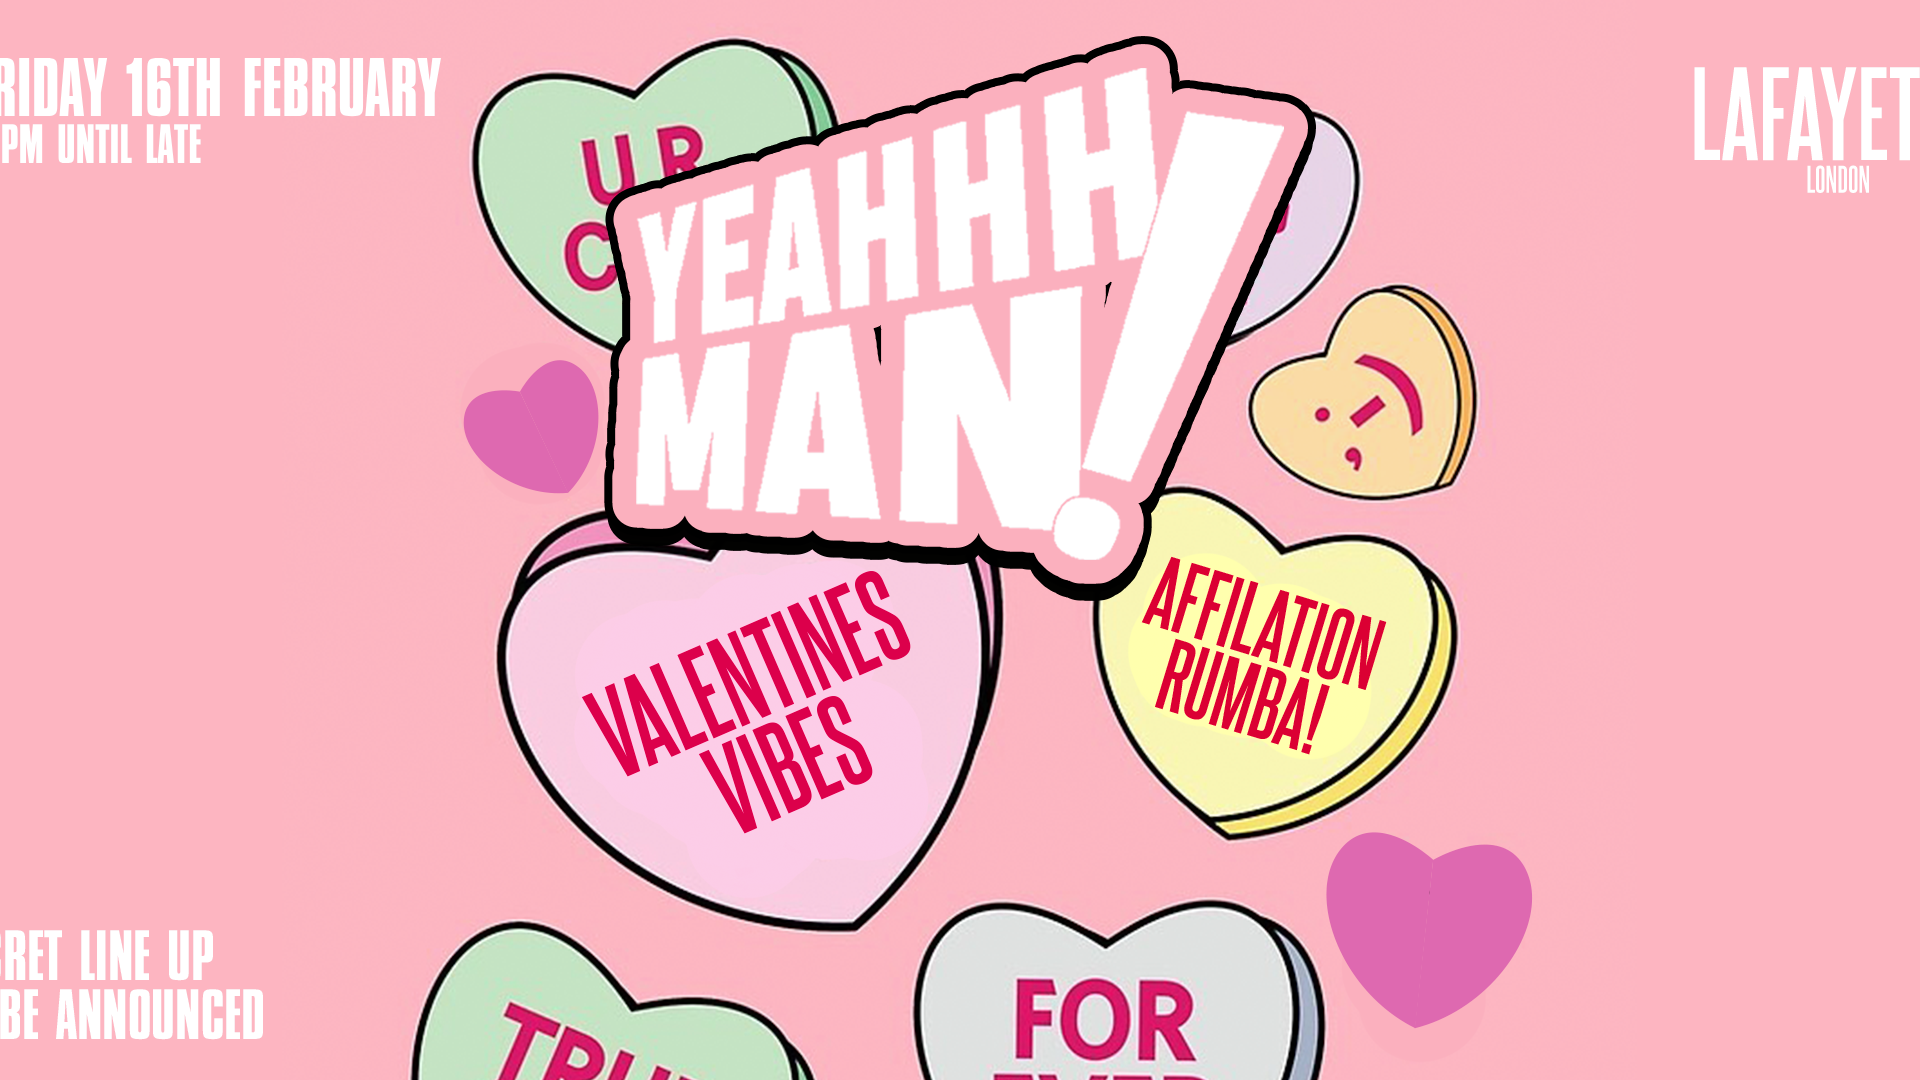 YeahhhManParties Valentines Vibes Affilation RUMBA!